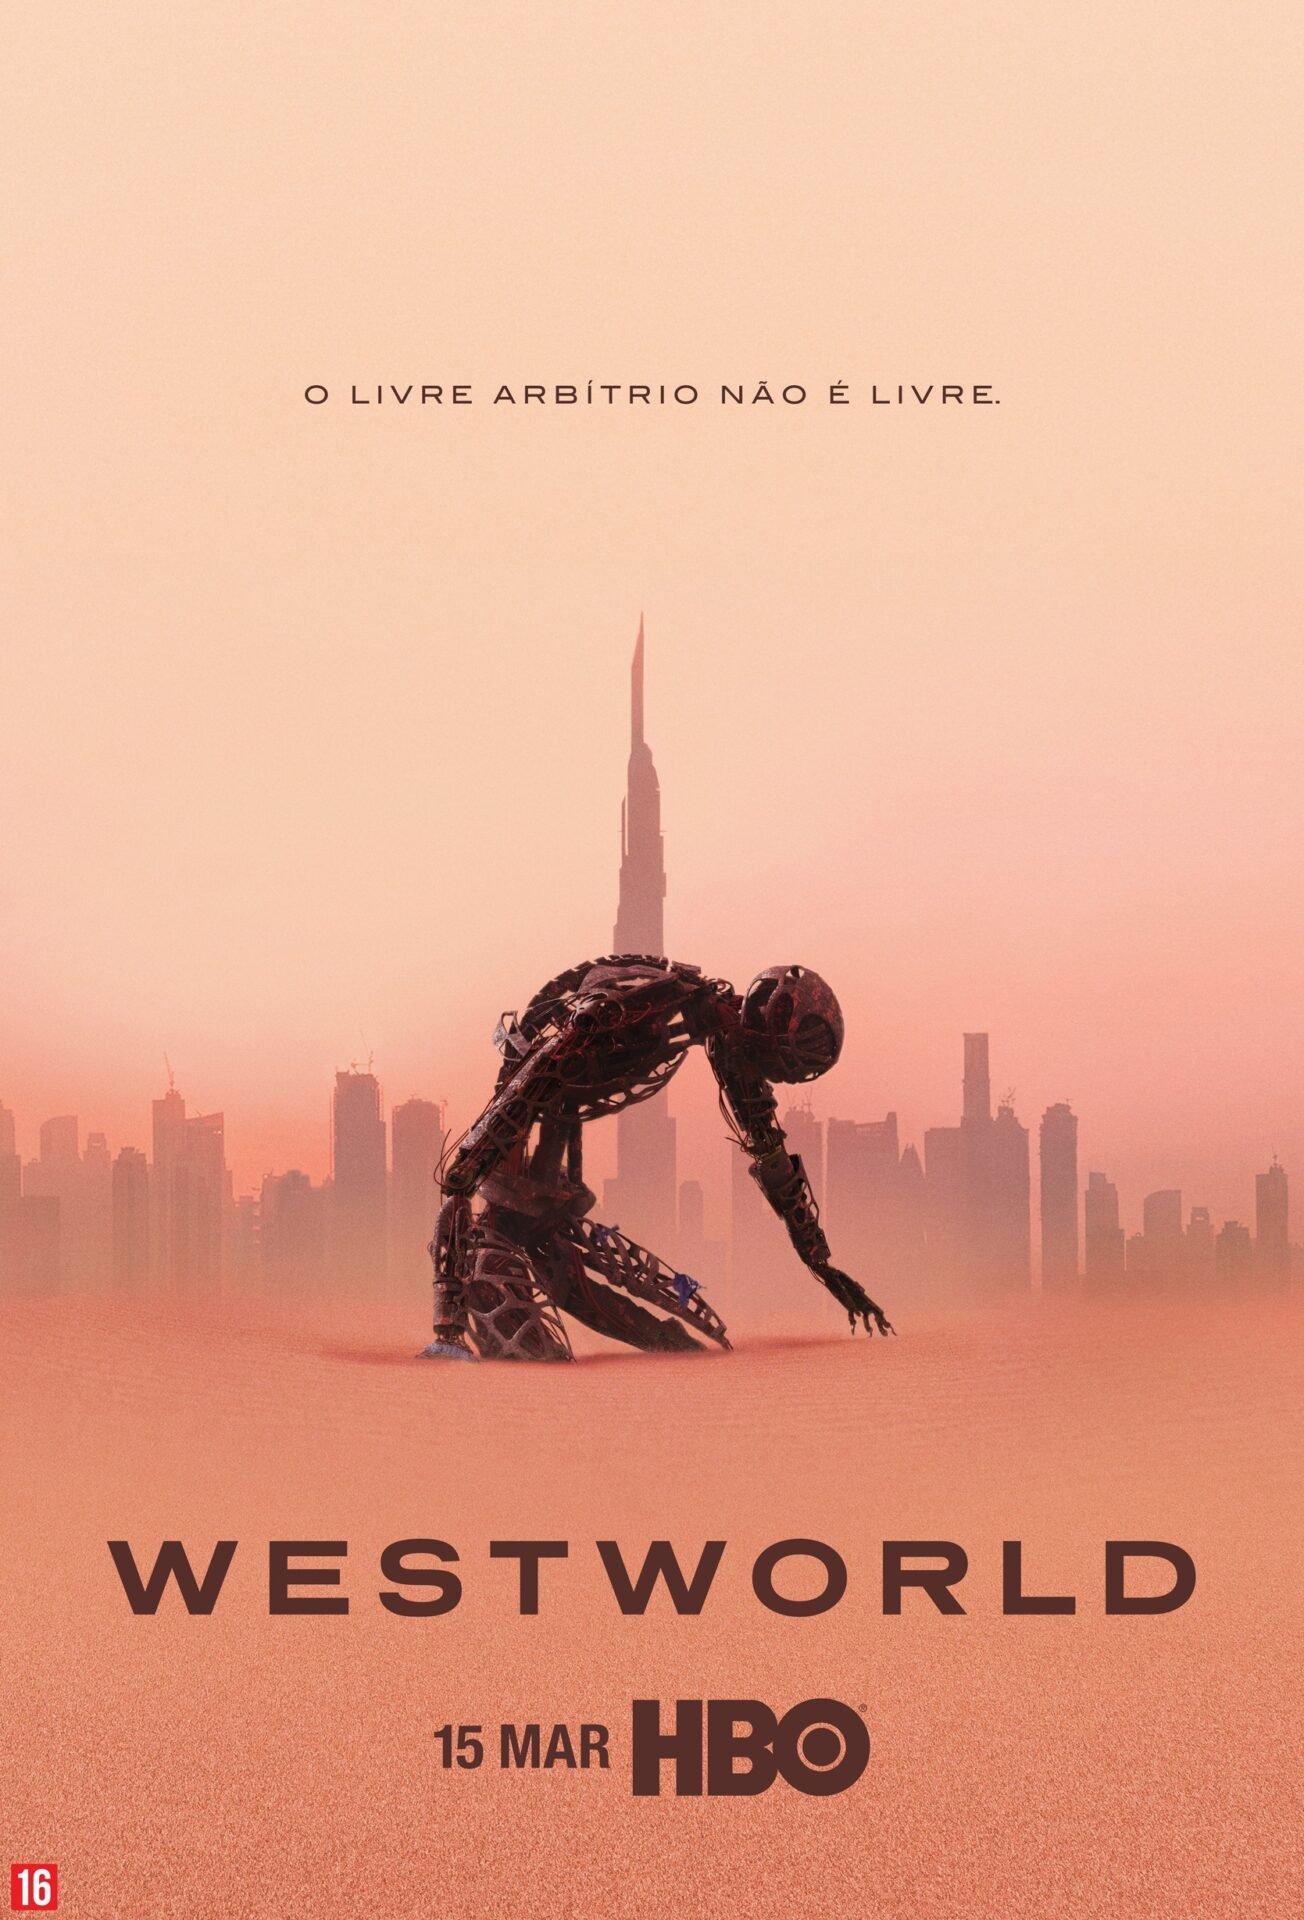 https://cinepop.com.br/wp-content/uploads/2020/03/westworld-season-2-poster.jpg